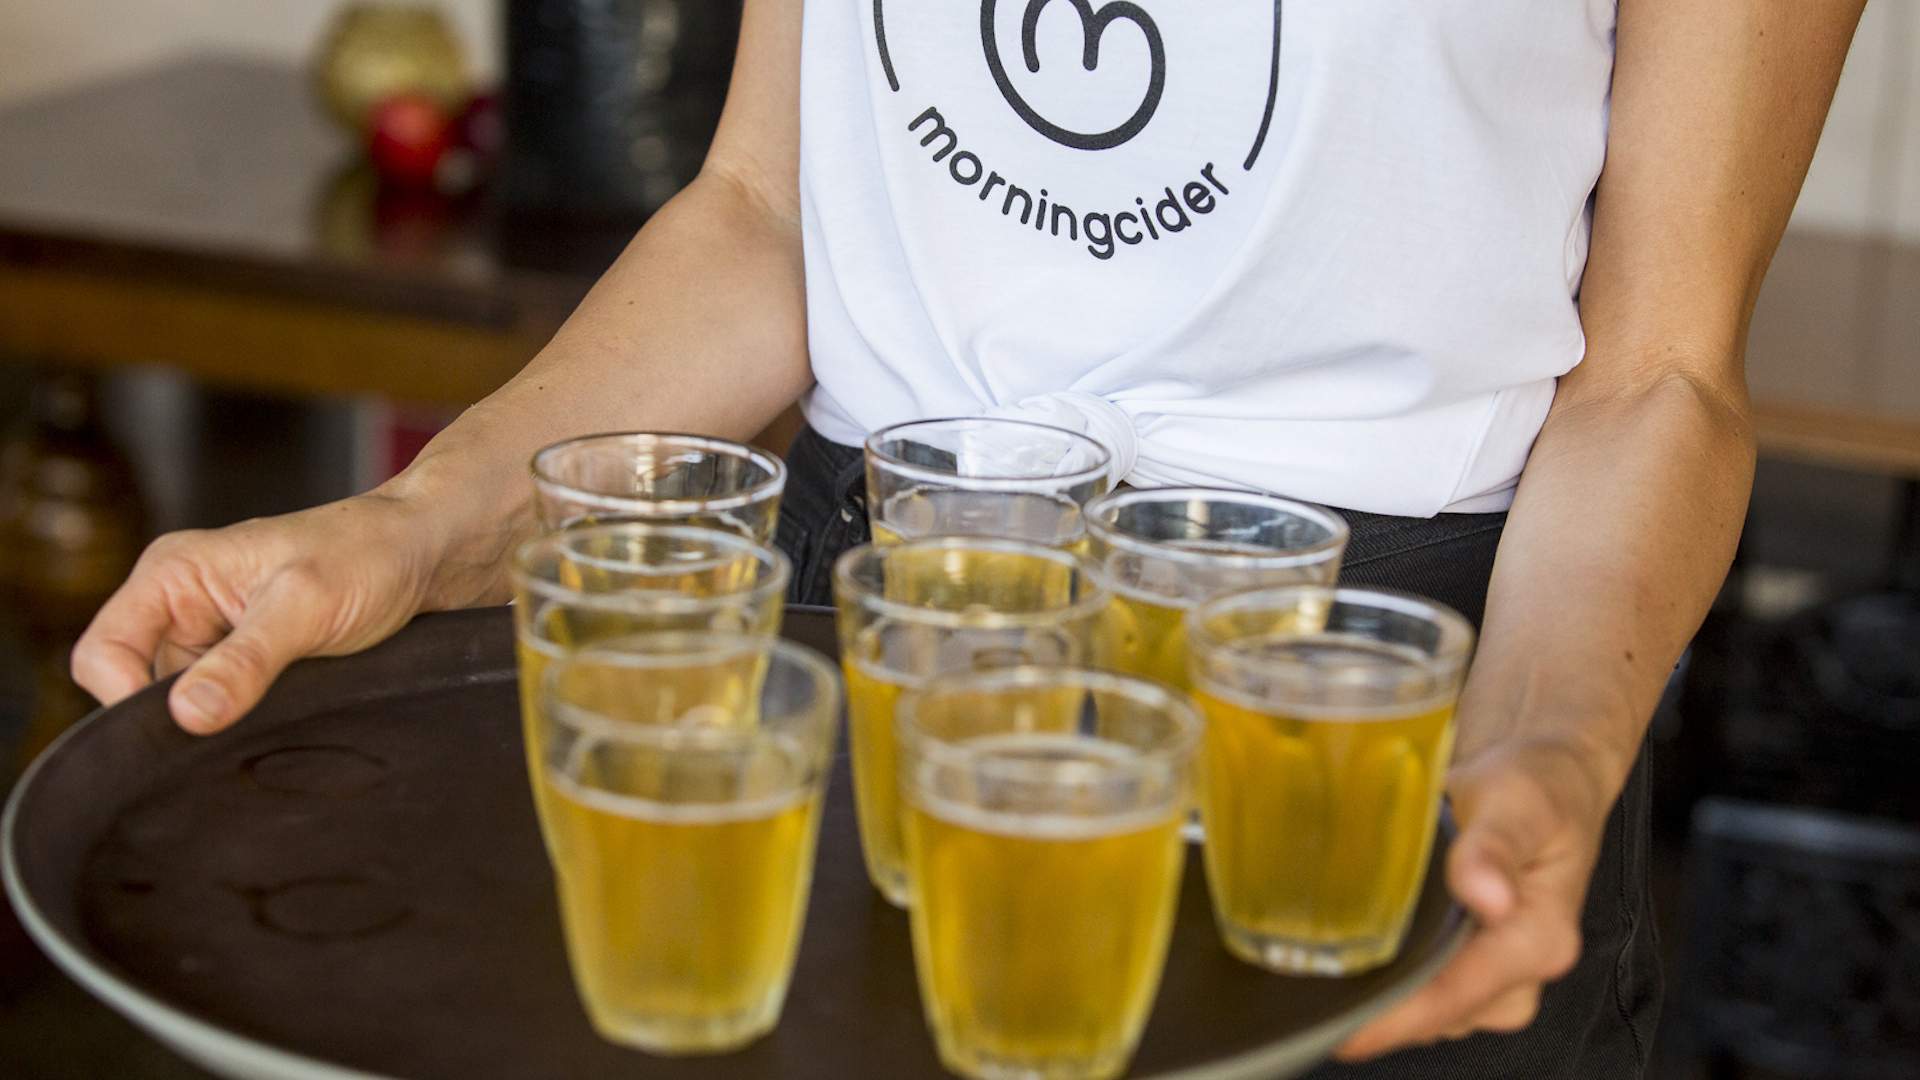 Meet Morningside's New Community-Focused Cider Company